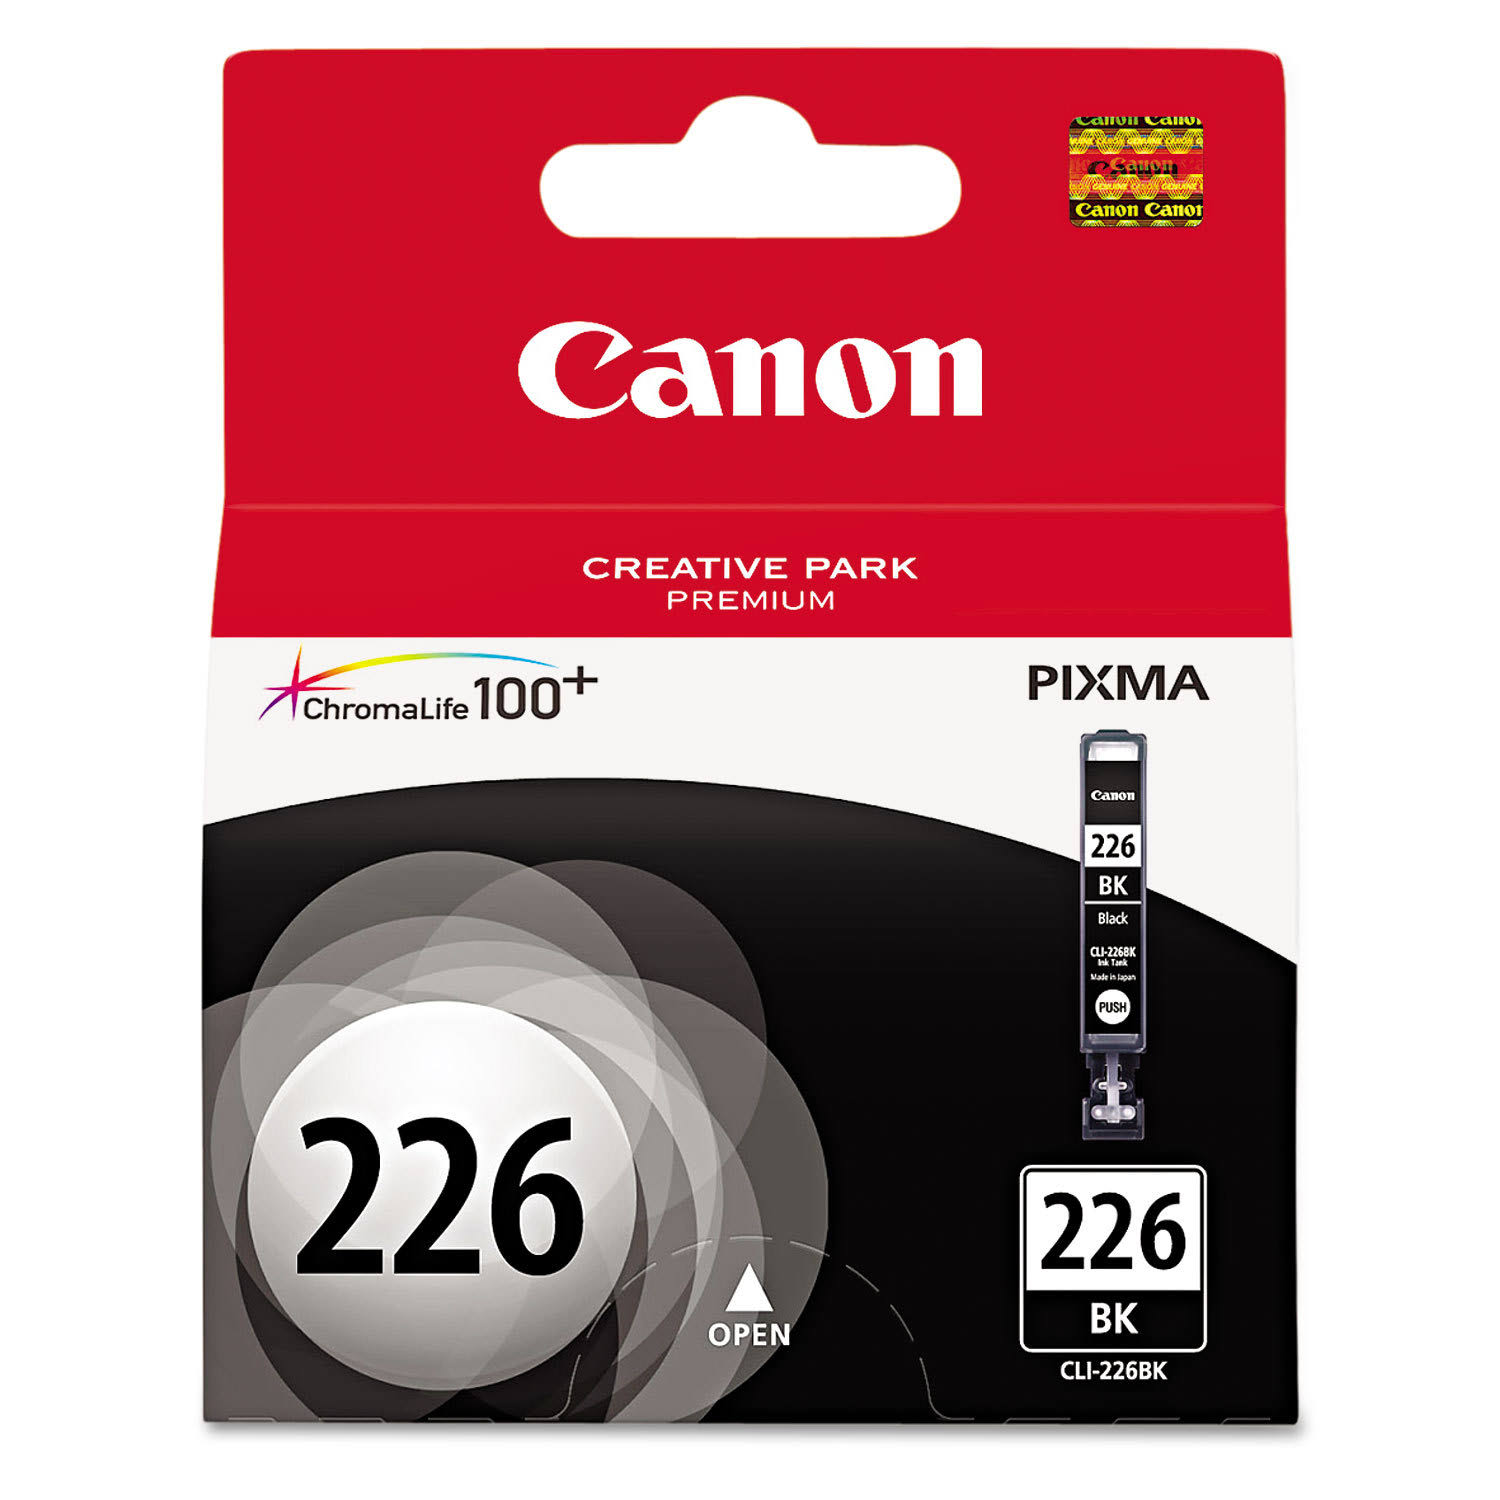 Canon Pixma Ink Tank - Black 226